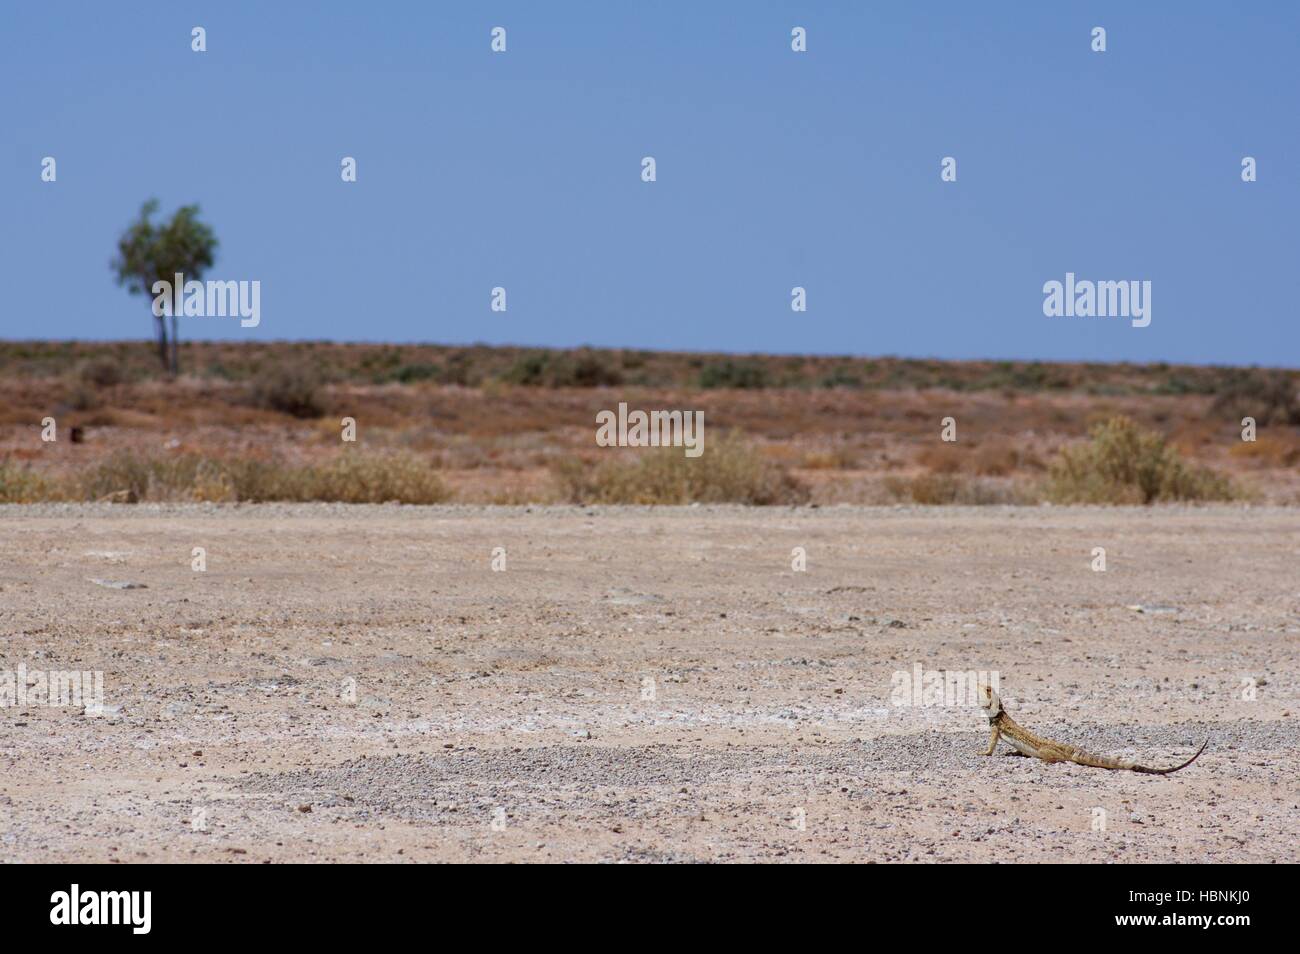 An alert Central Bearded Dragon (Pogona vitticeps) on a gravel track in South Australia. Stock Photo